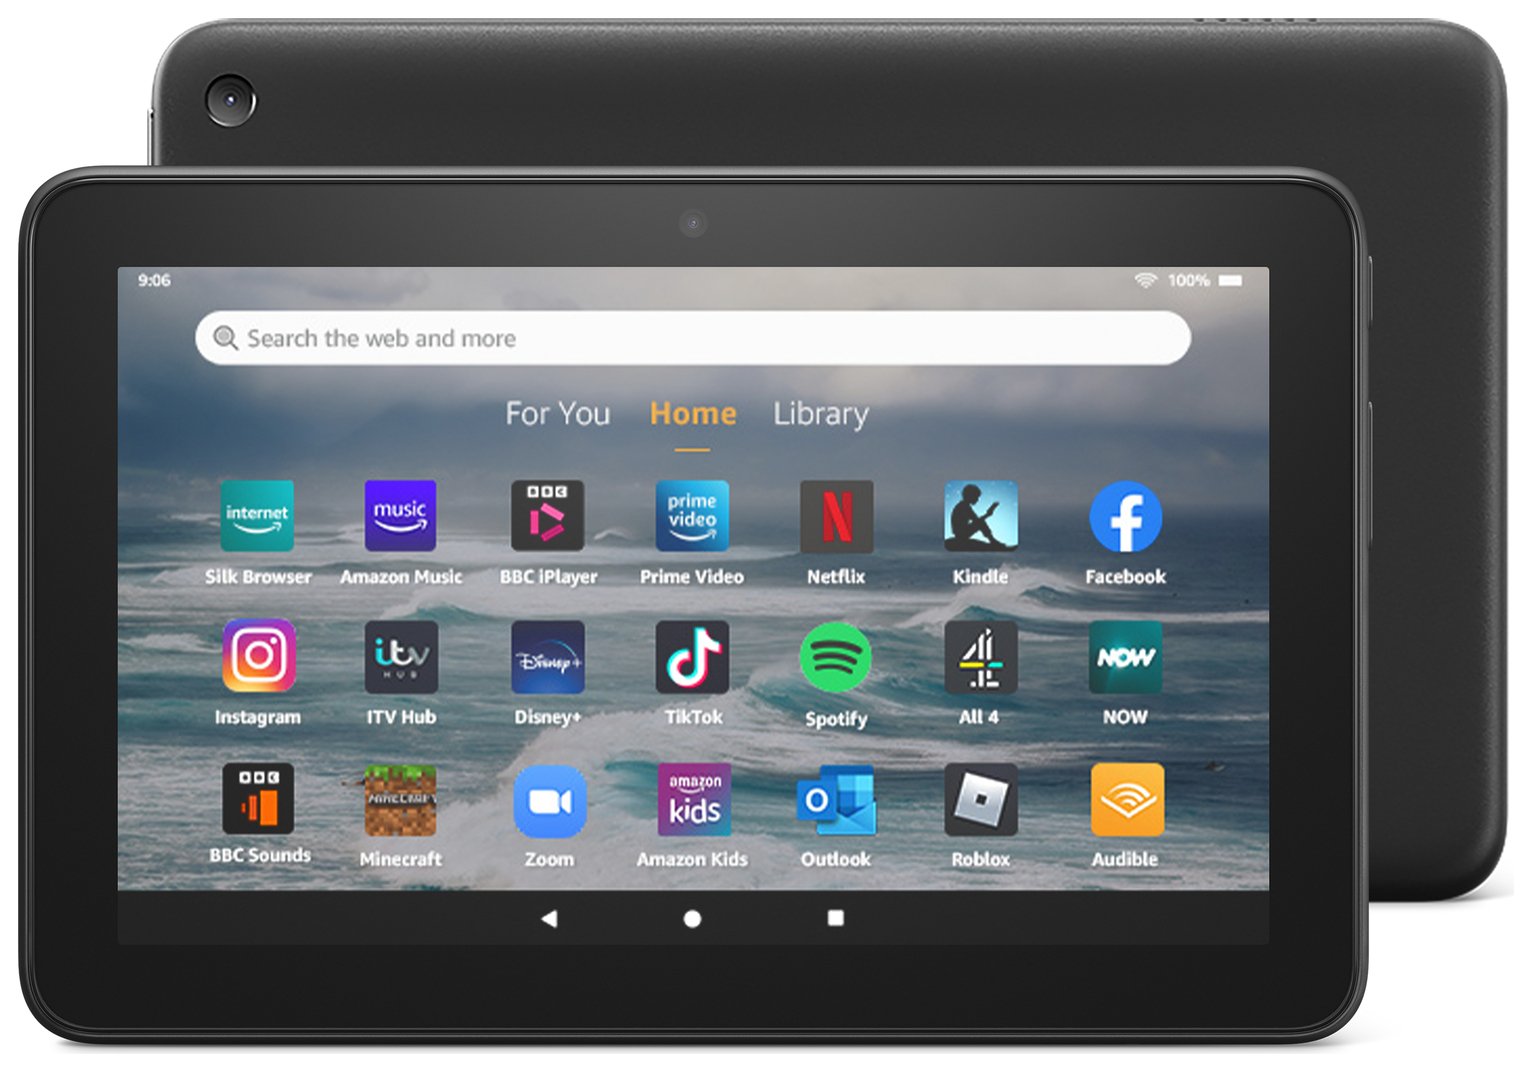 Amazon Fire 7 7 Inch 32GB Wi-Fi Tablet – Black